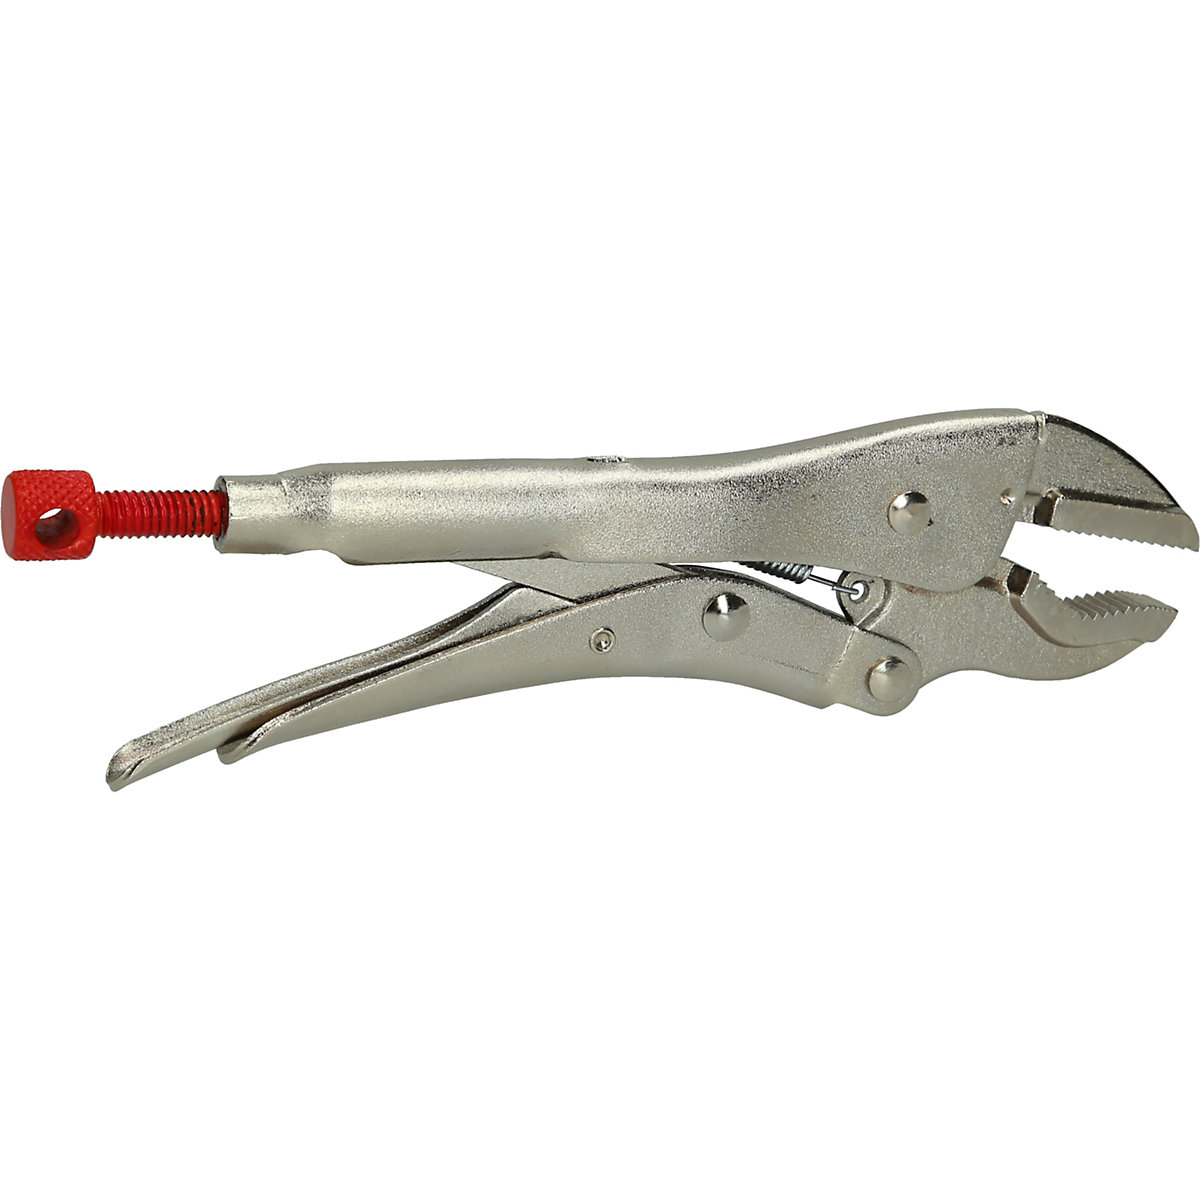 Tenaza de agarre, mordazas en V – KS Tools (Imagen del producto 2)-1